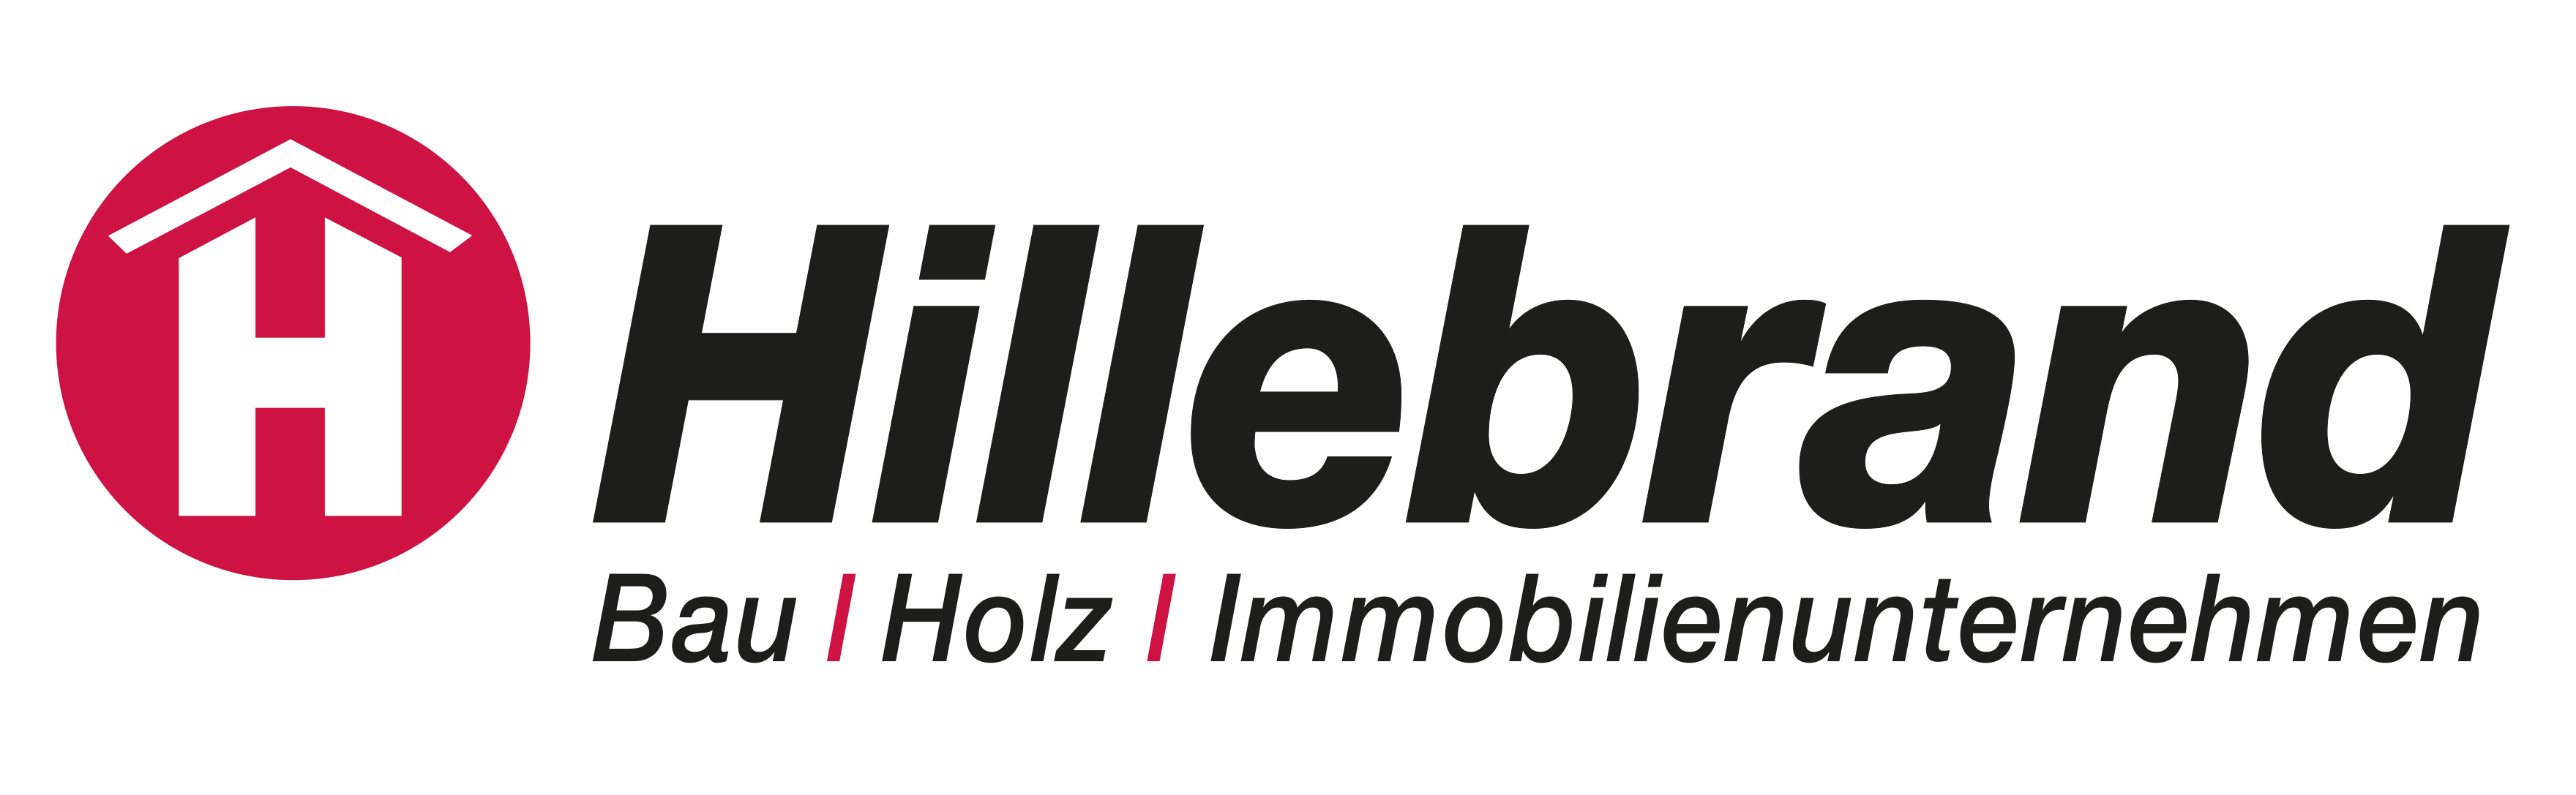 Logo Hillebrand_Bau Holz Immo